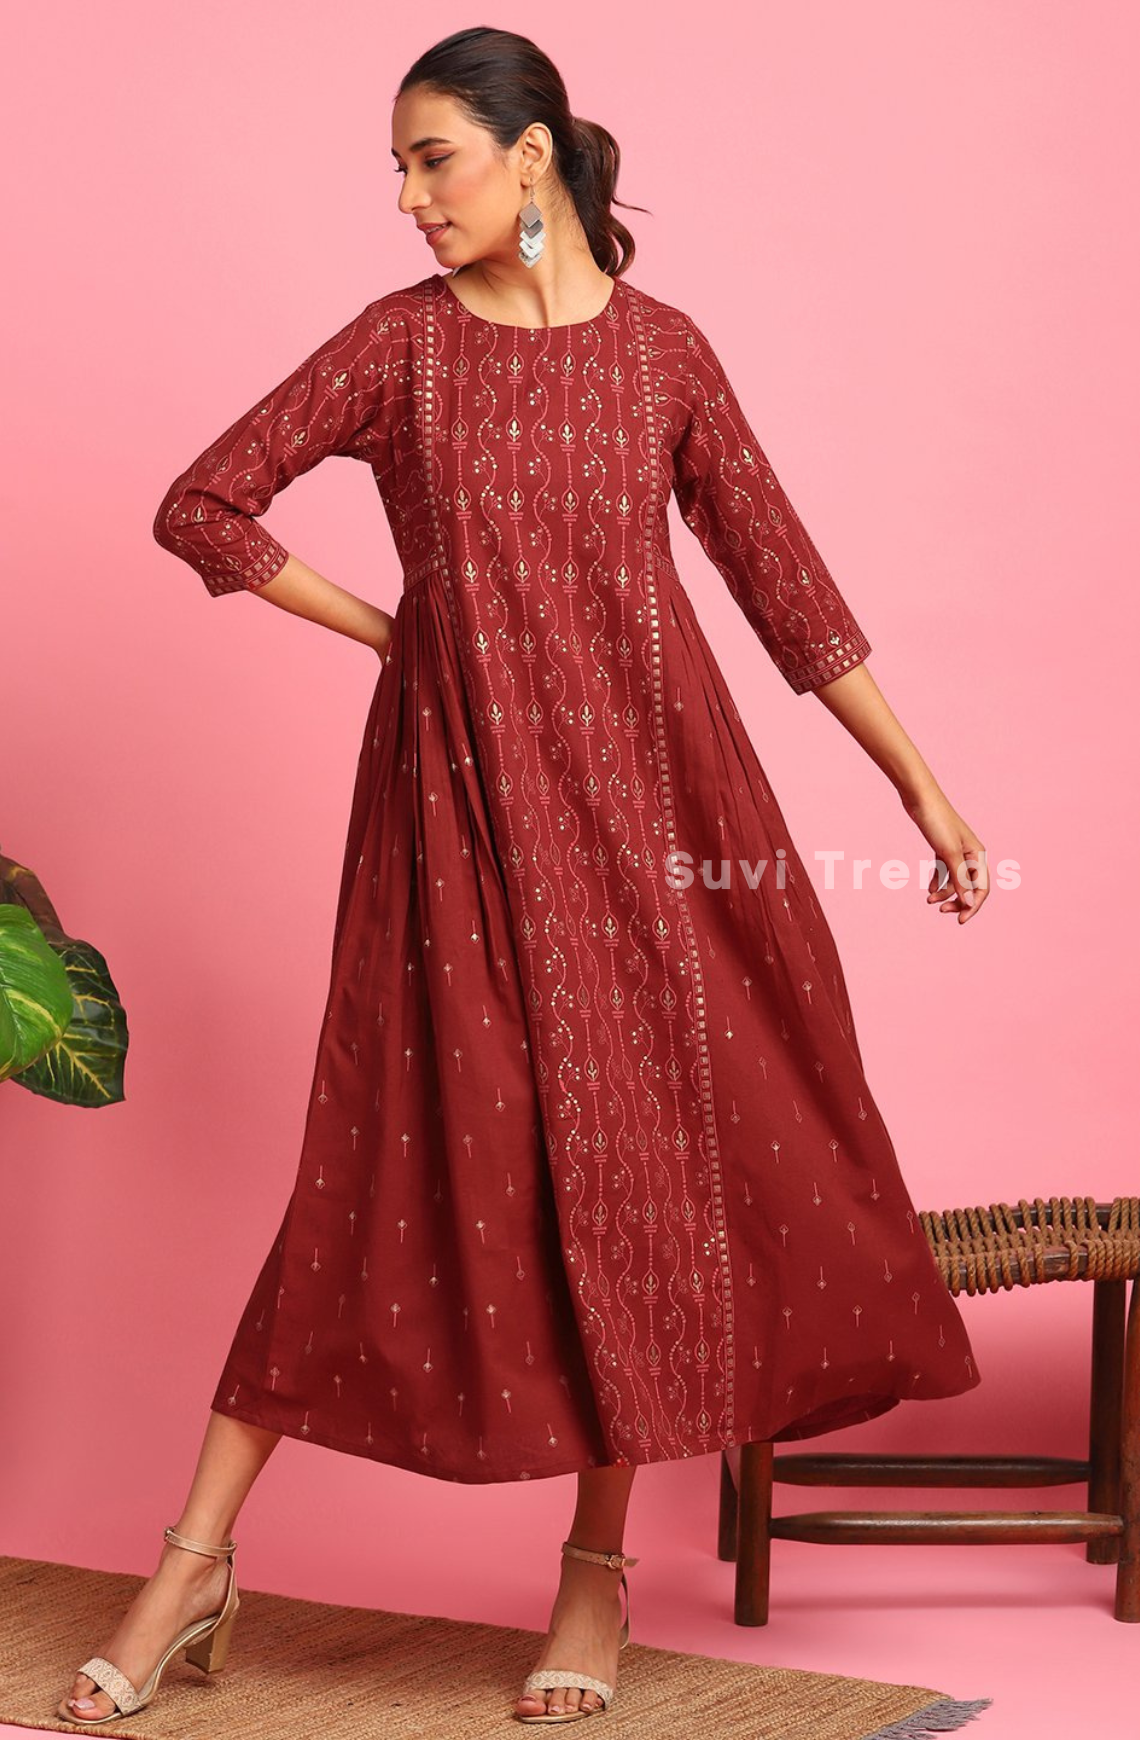 Indus Cotton dress - Buy Designer Ethnic Wear for Women Online in India -  Idaho Clothing